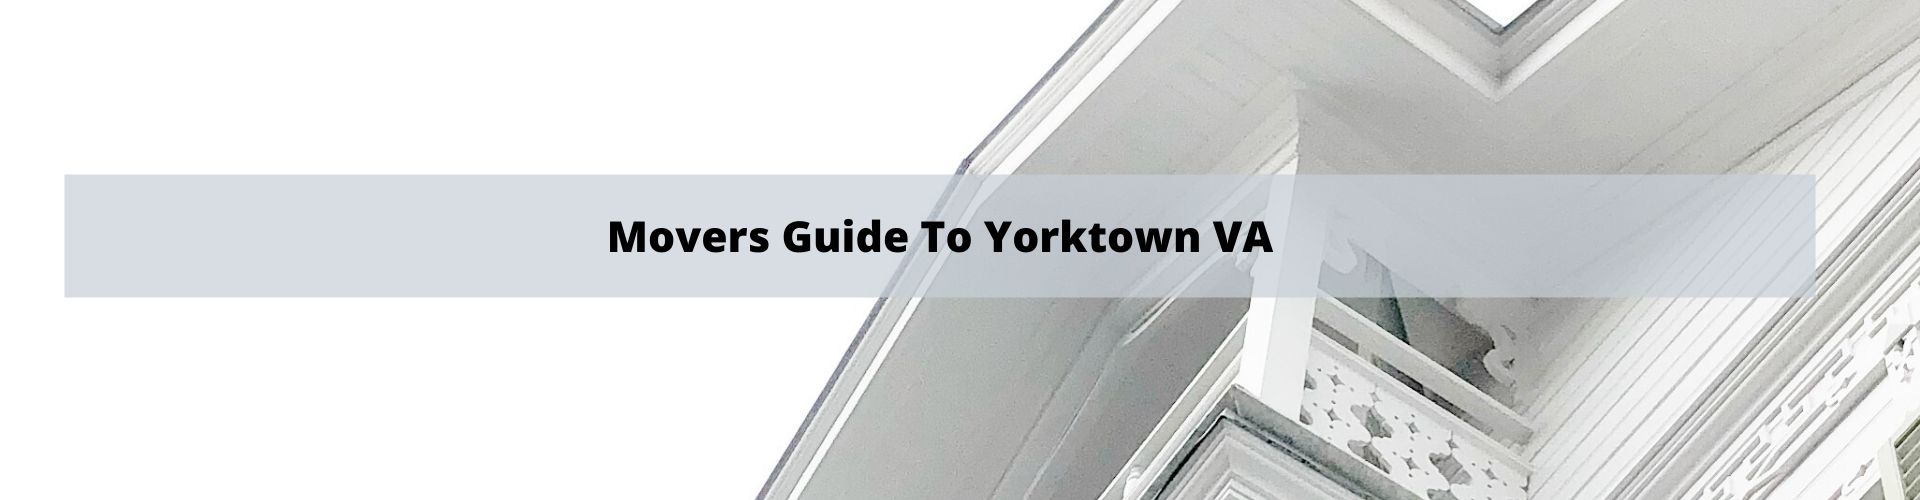 Yorktown VA Mover's Guide